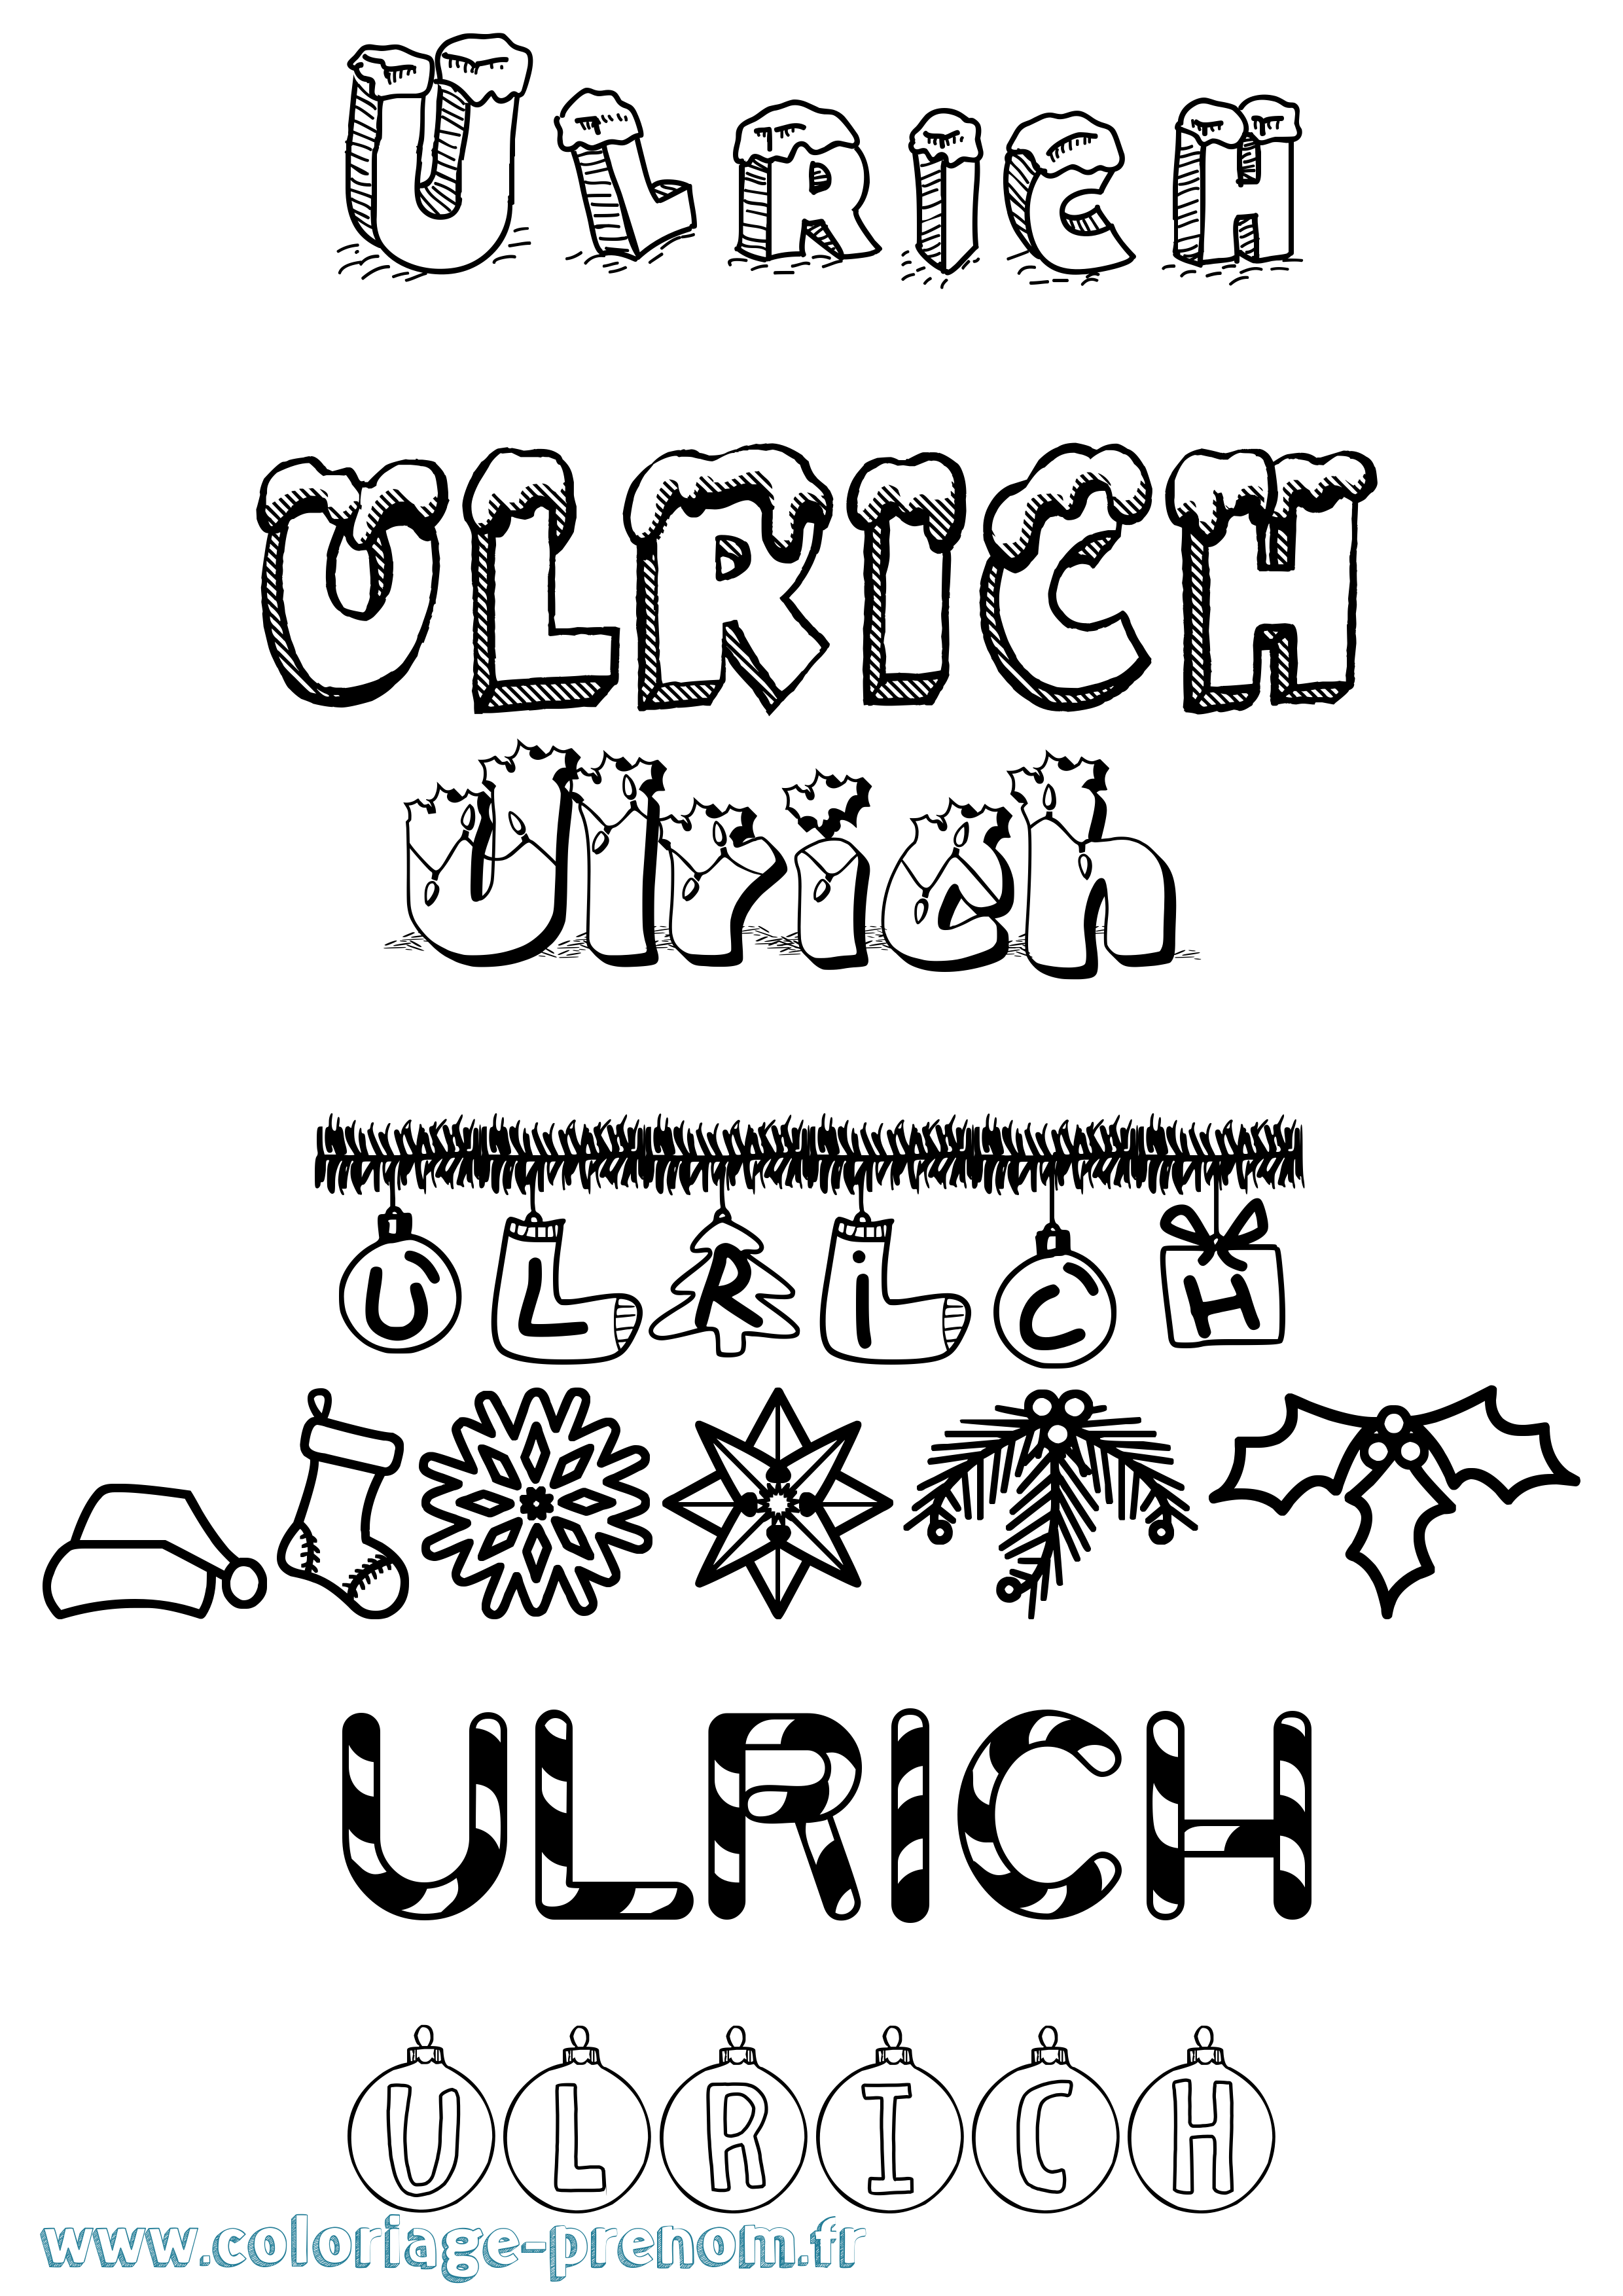 Coloriage prénom Ulrich Noël